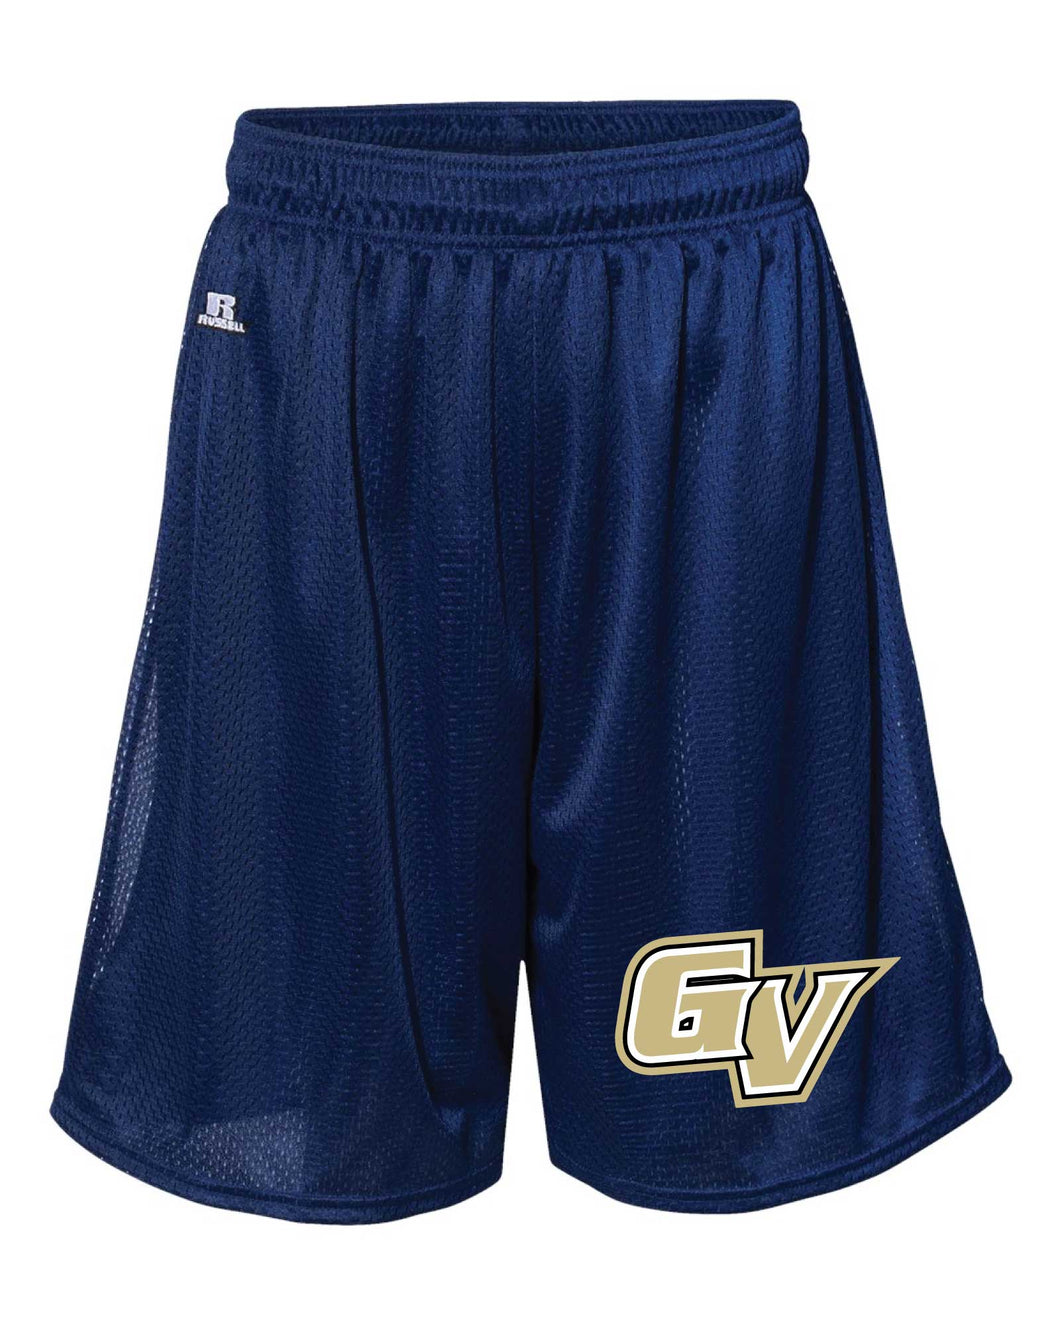 Golden Valley Wrestling Russell Athletic Tech Shorts - Navy - 5KounT